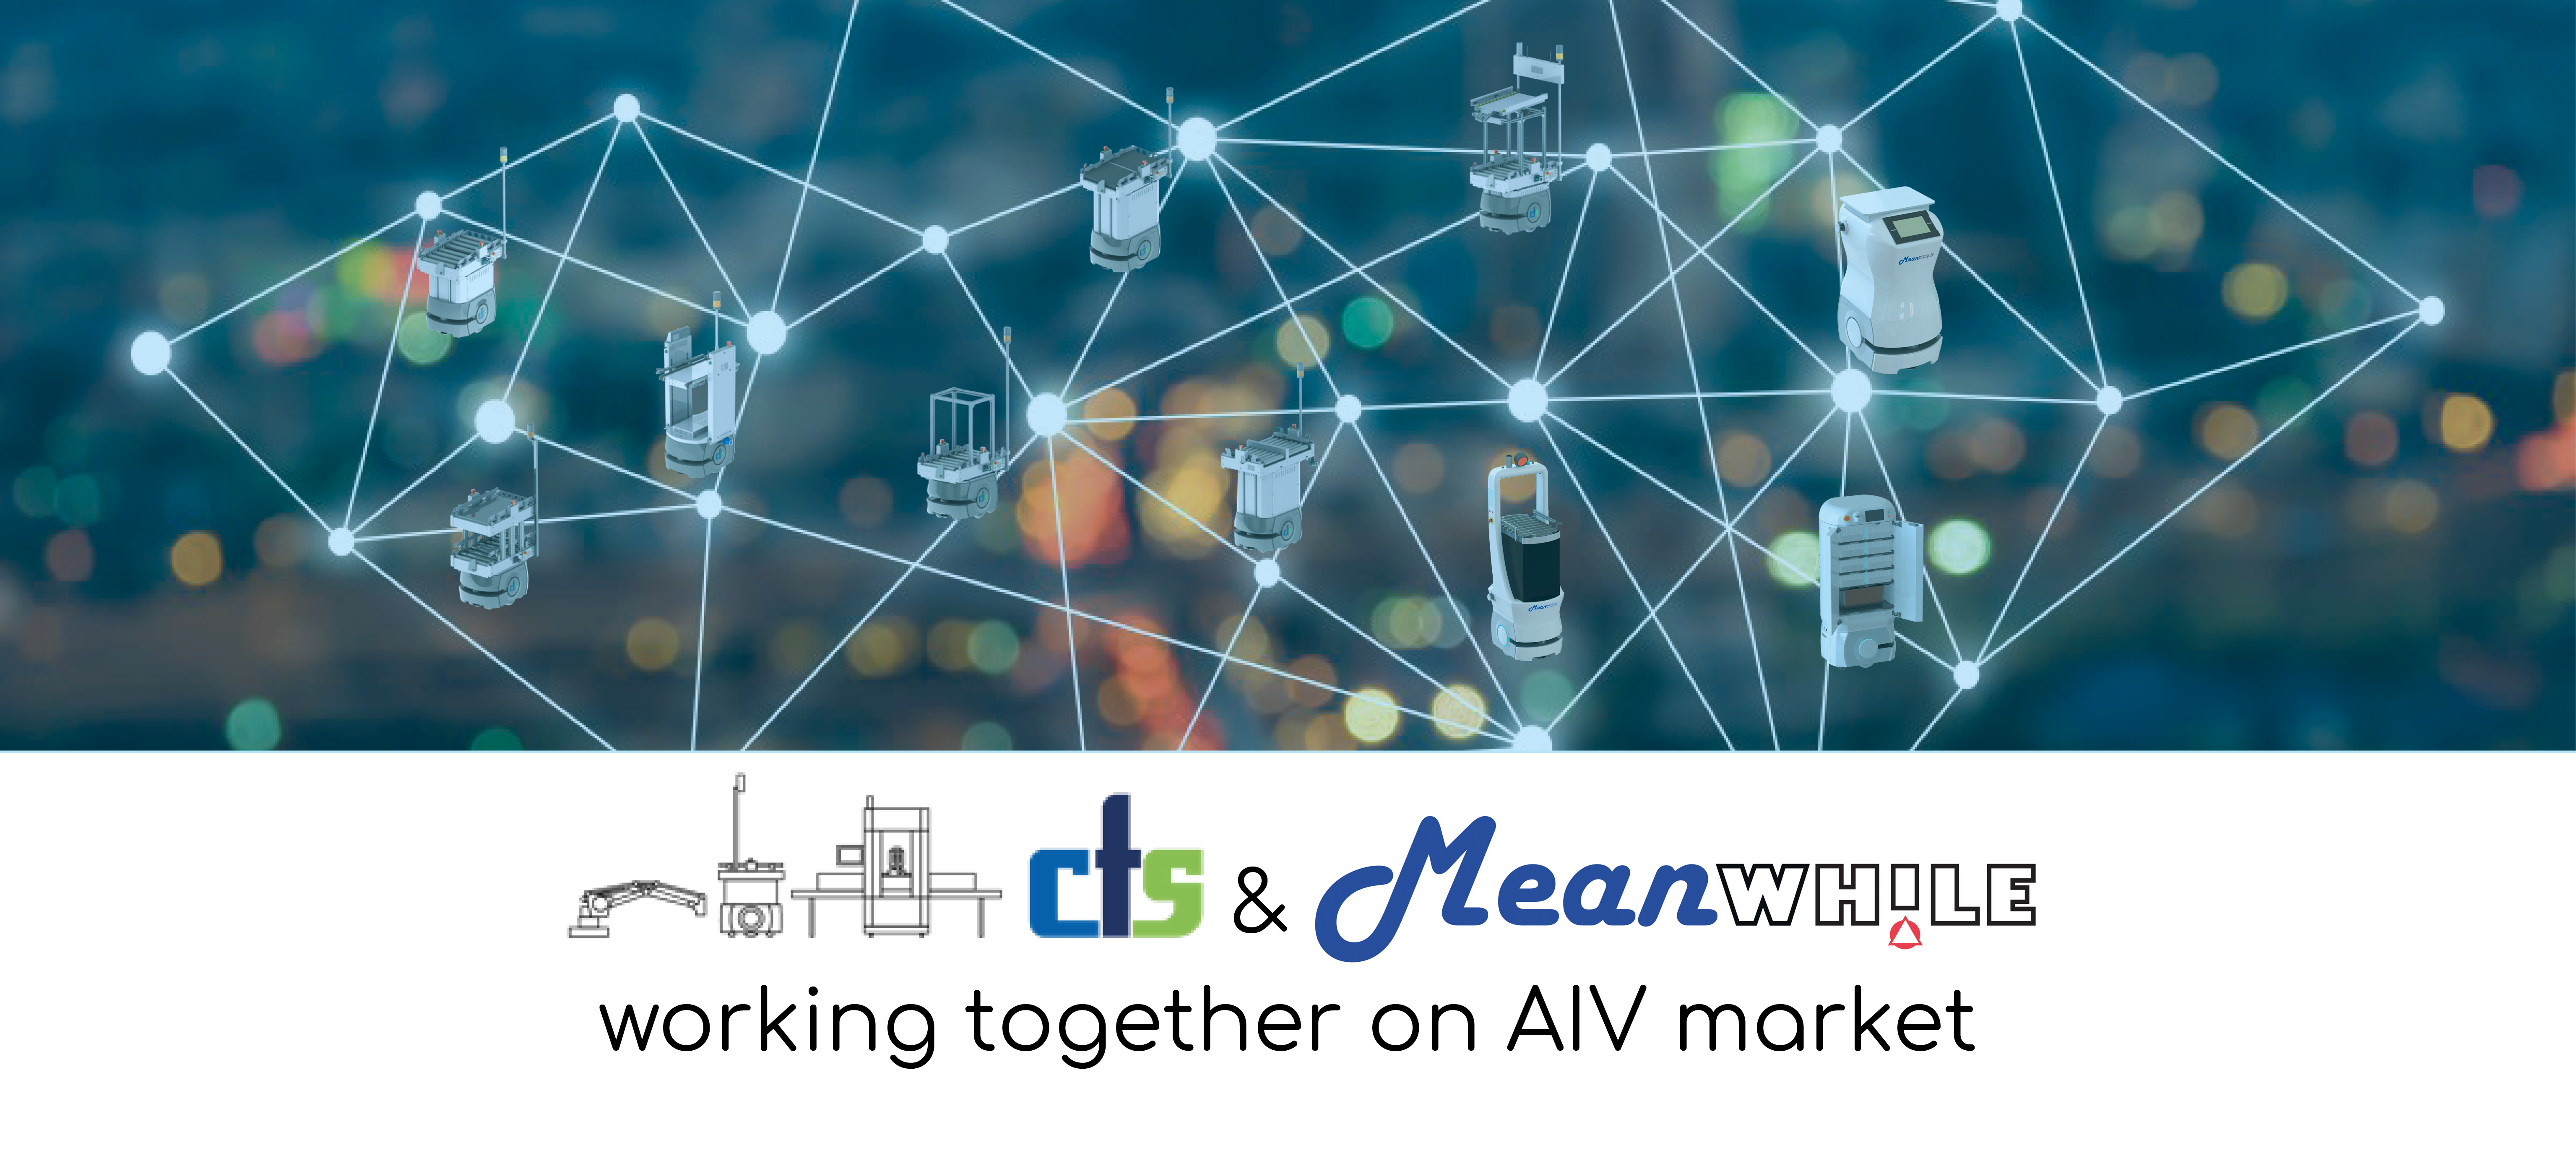 Lire la suite à propos de l’article Cooperation between cts GmbH and Meanwhile on AIV market